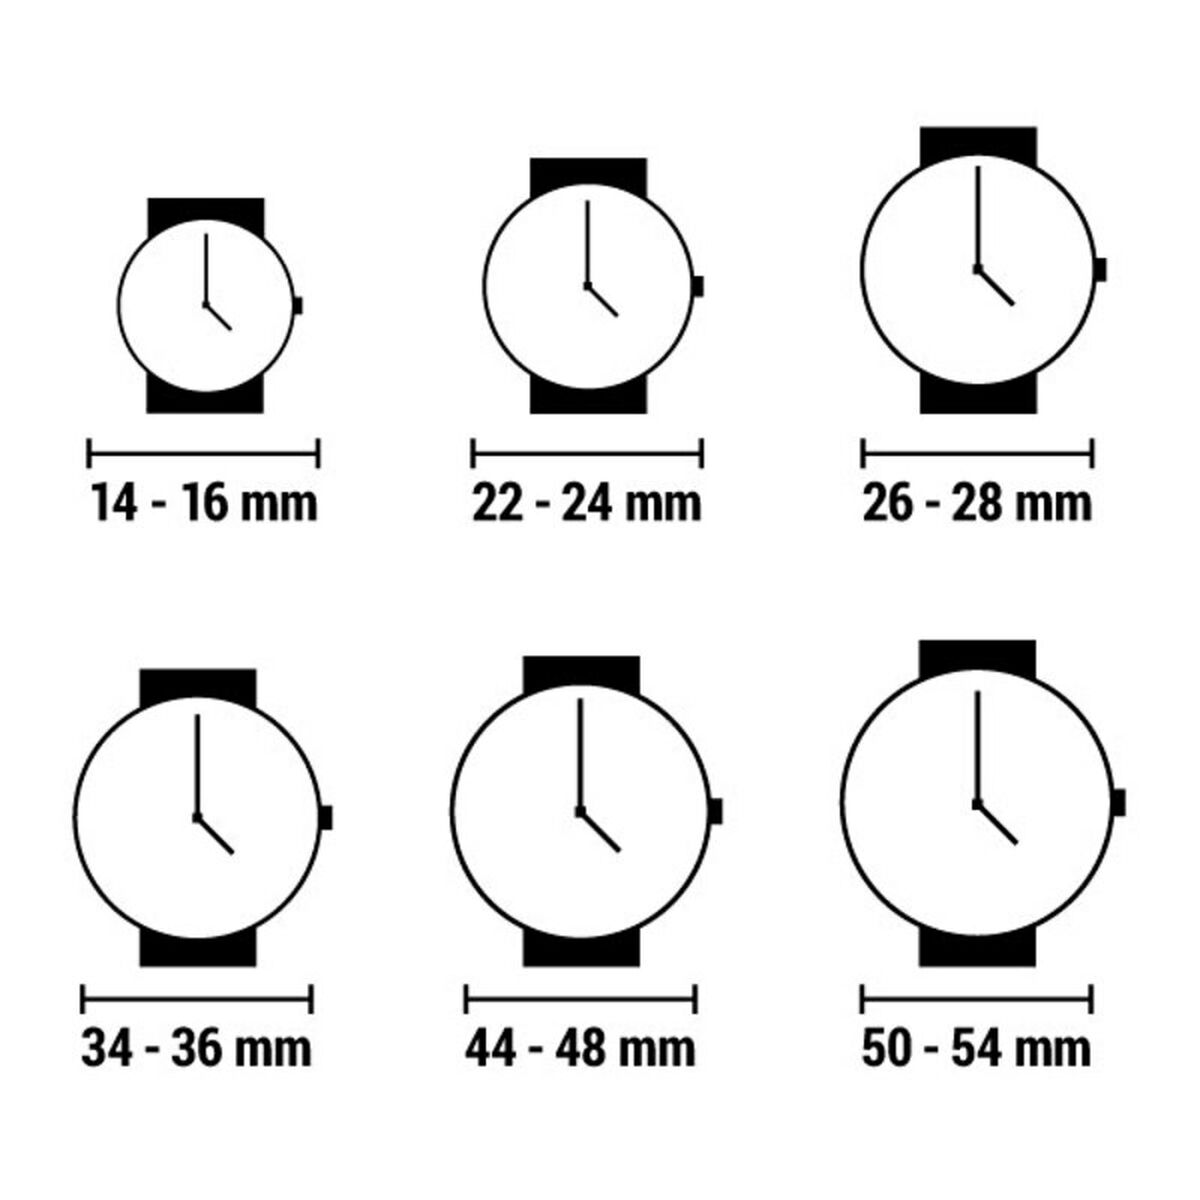 Horloge Dames Alpha Saphir 365B (Ø 38 mm)